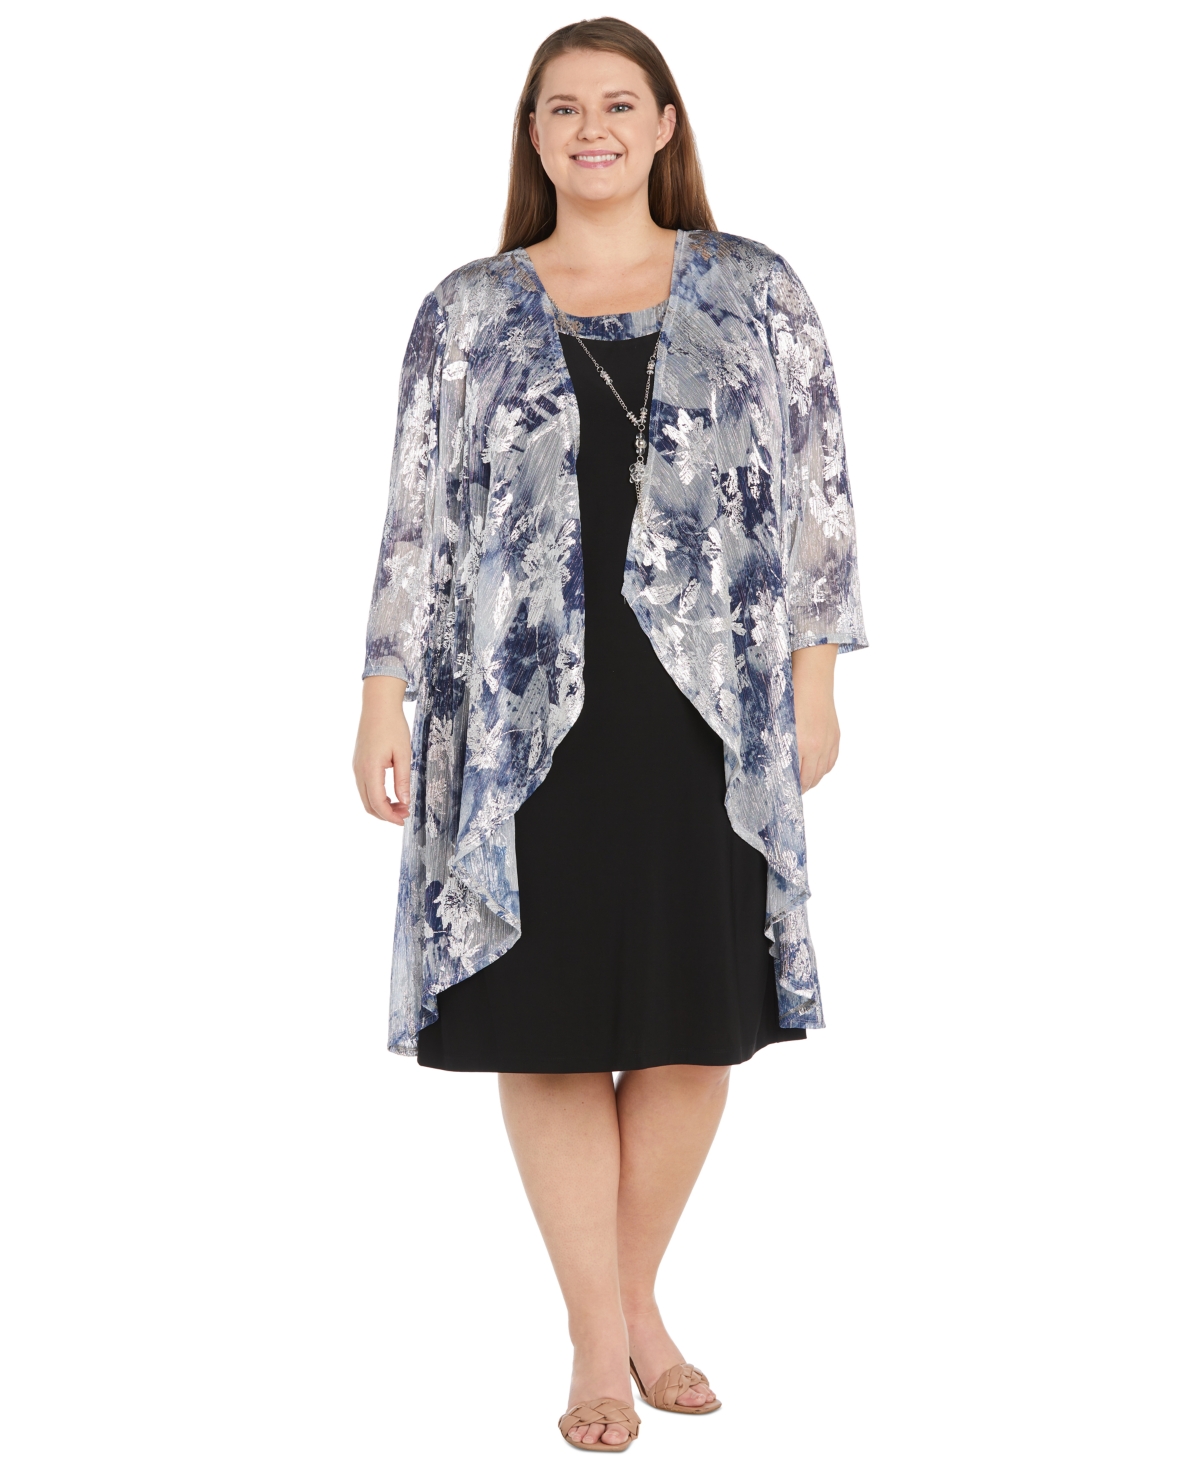 Plus Size 2-Pc. Floral-Print Jacket & Dress Set - Navy/Silver